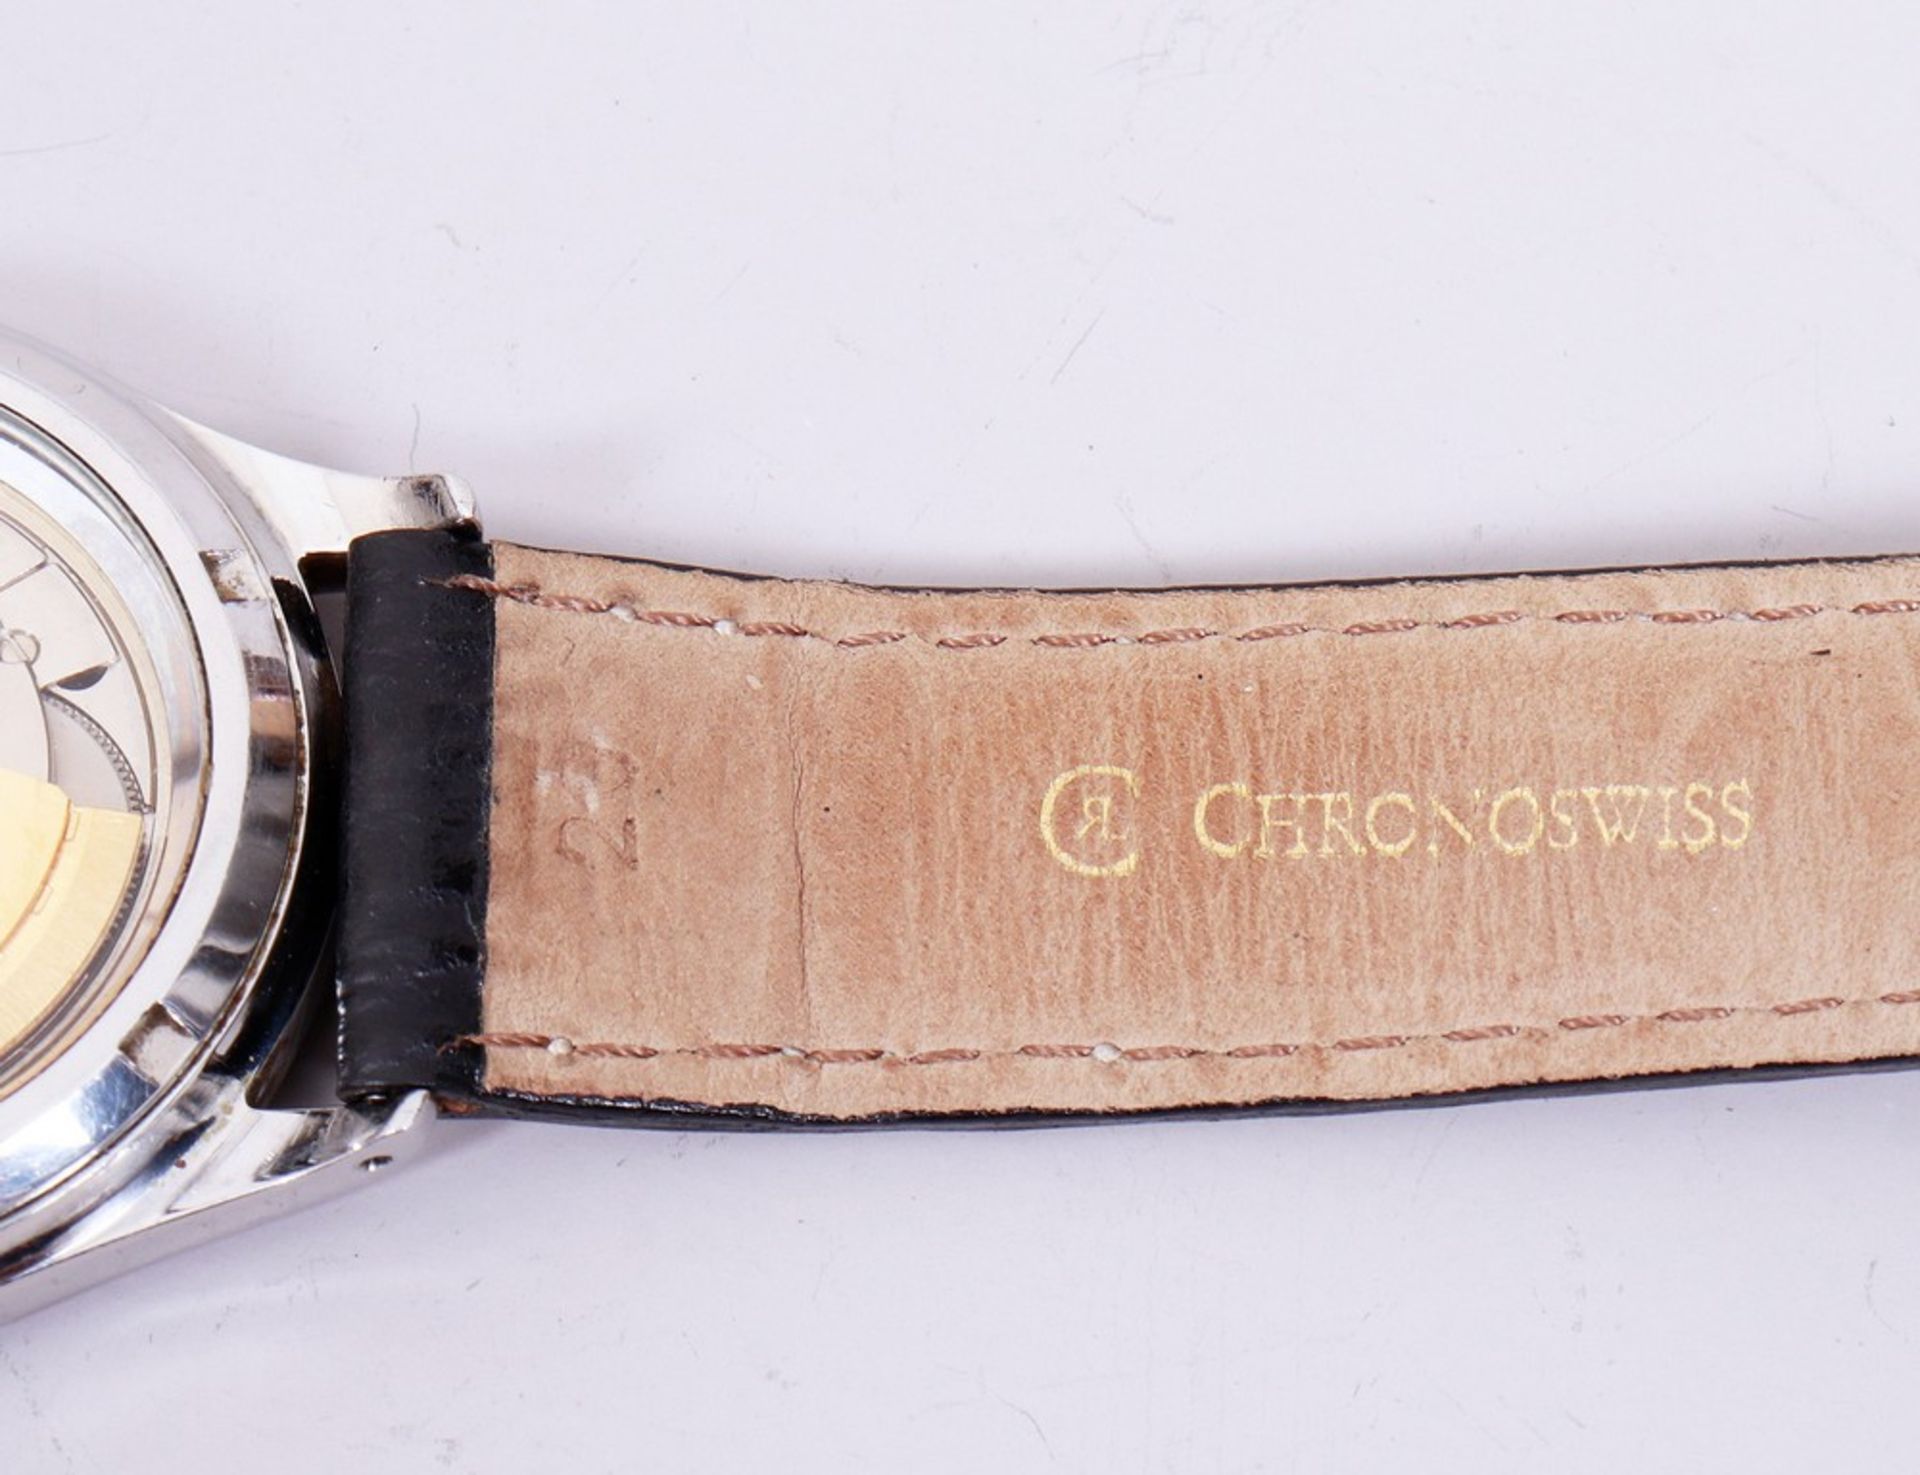 Men's wristwatch, Chronoswiss, model "Pacific 100m", 1990s - Image 10 of 13